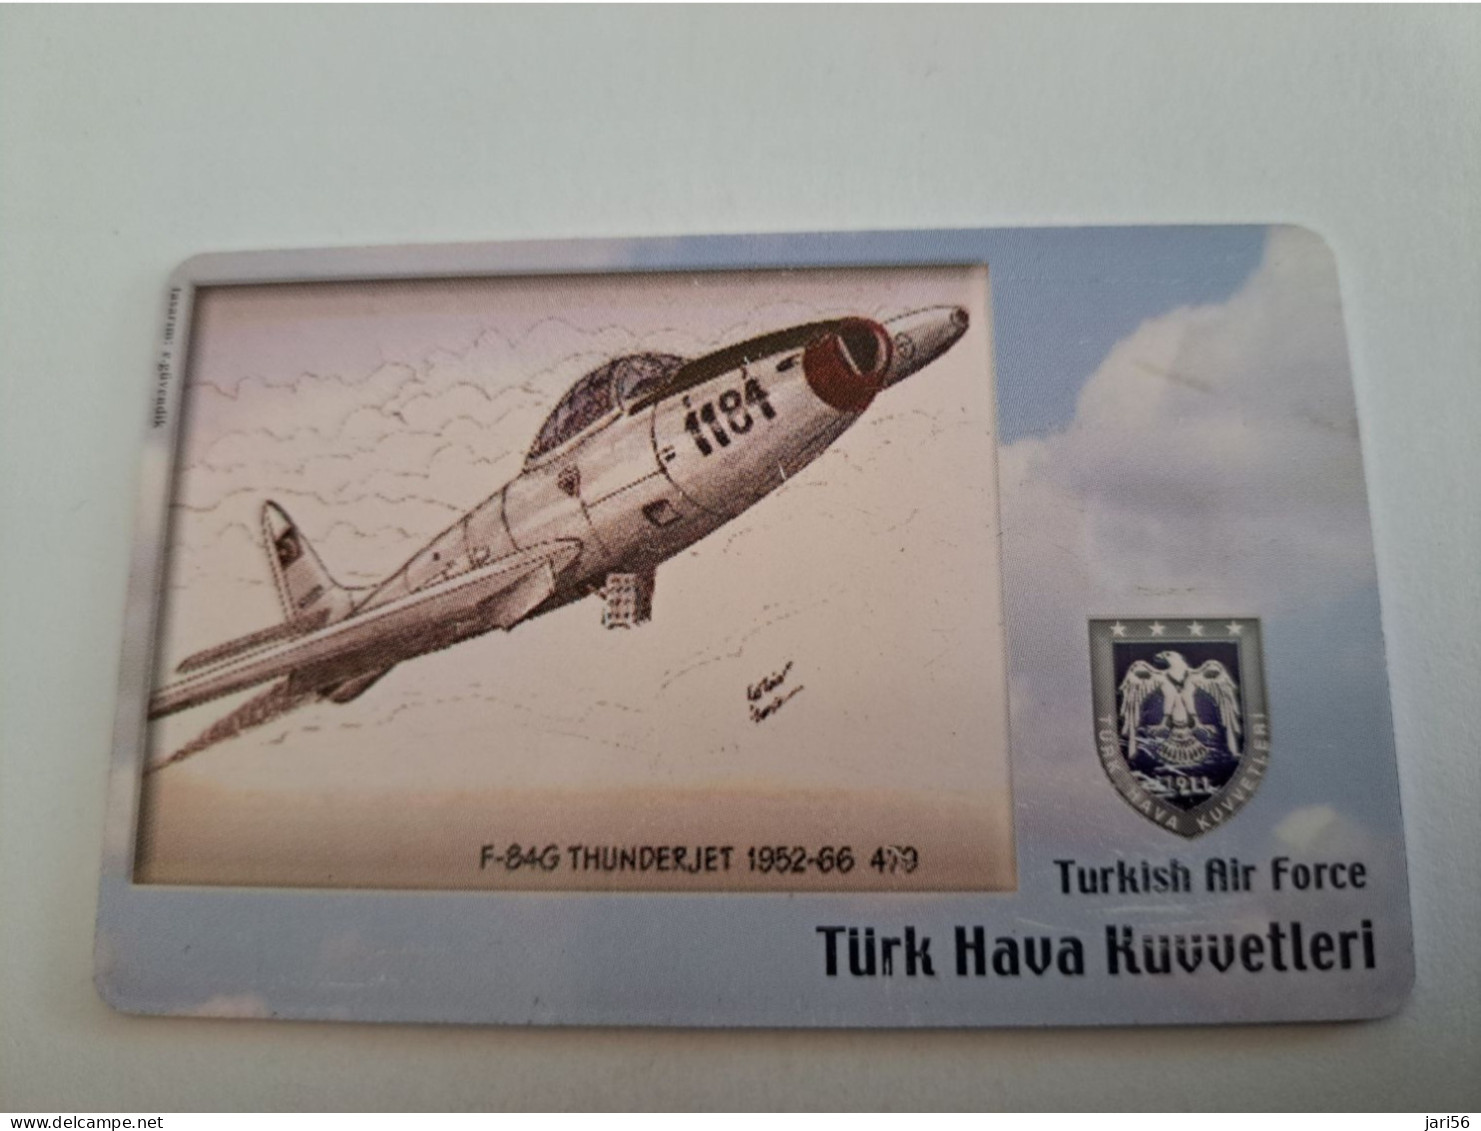 TURKIJE / 50 UNITS/ CHIPCARD/ TURKISH AIR FORCE  / DIFFERENT PLANES /        Fine Used Card  **15435** - Turkey